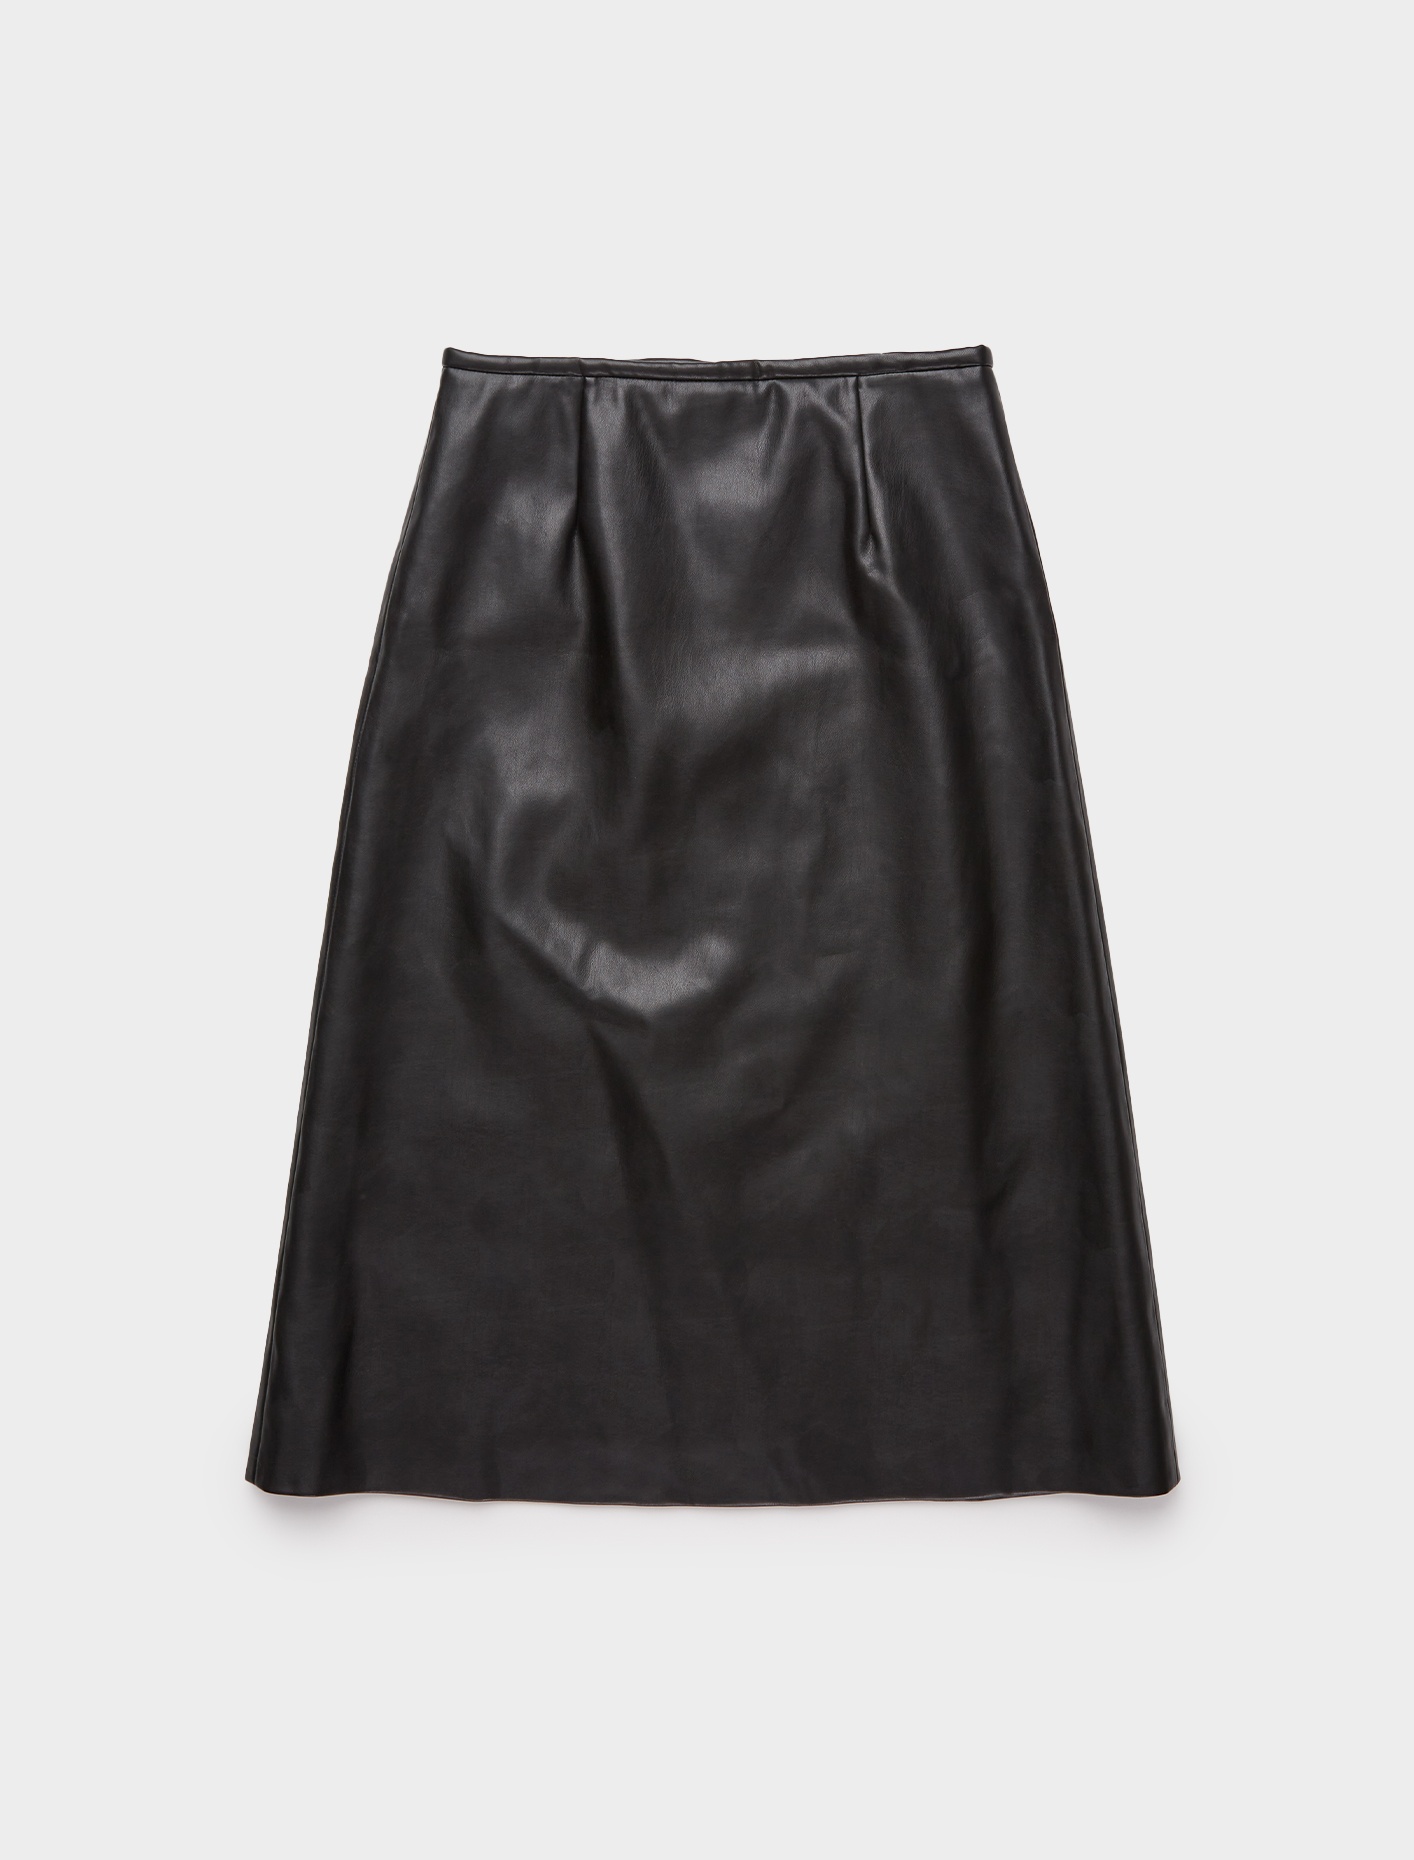 AMOMENTO Vegan Leather A-Line Skirt | Voo Store Berlin | Worldwide Shipping